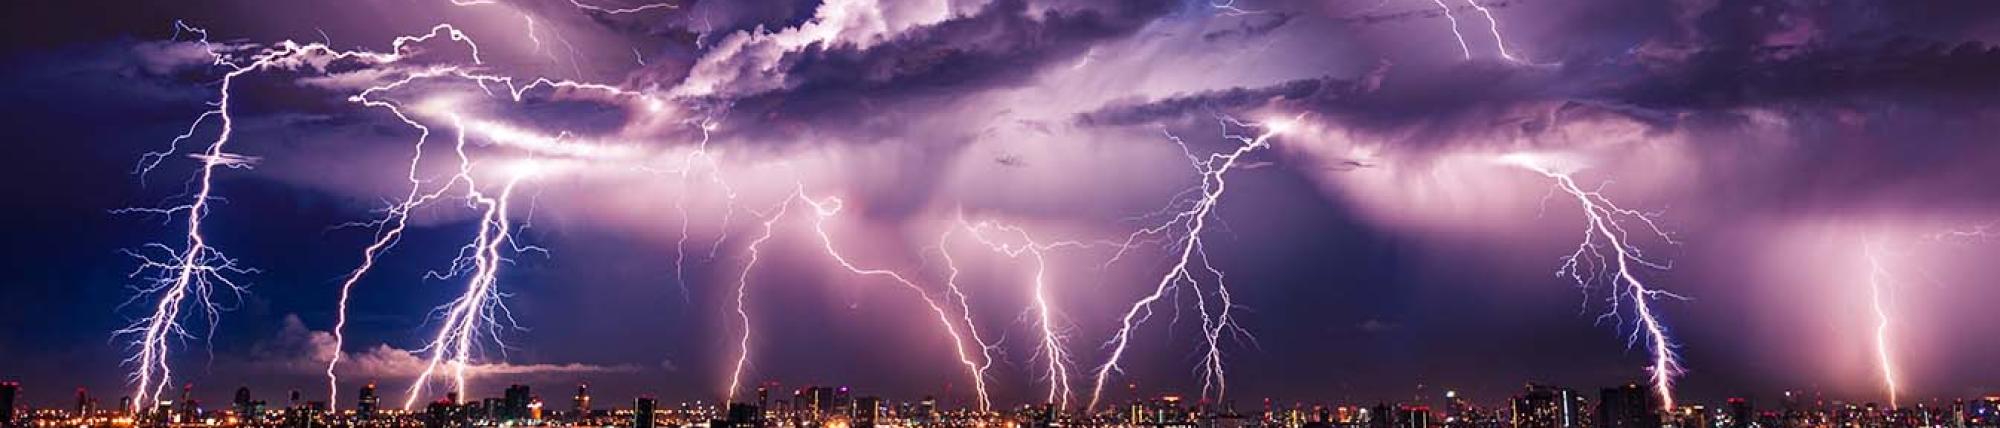 image of lightning storm